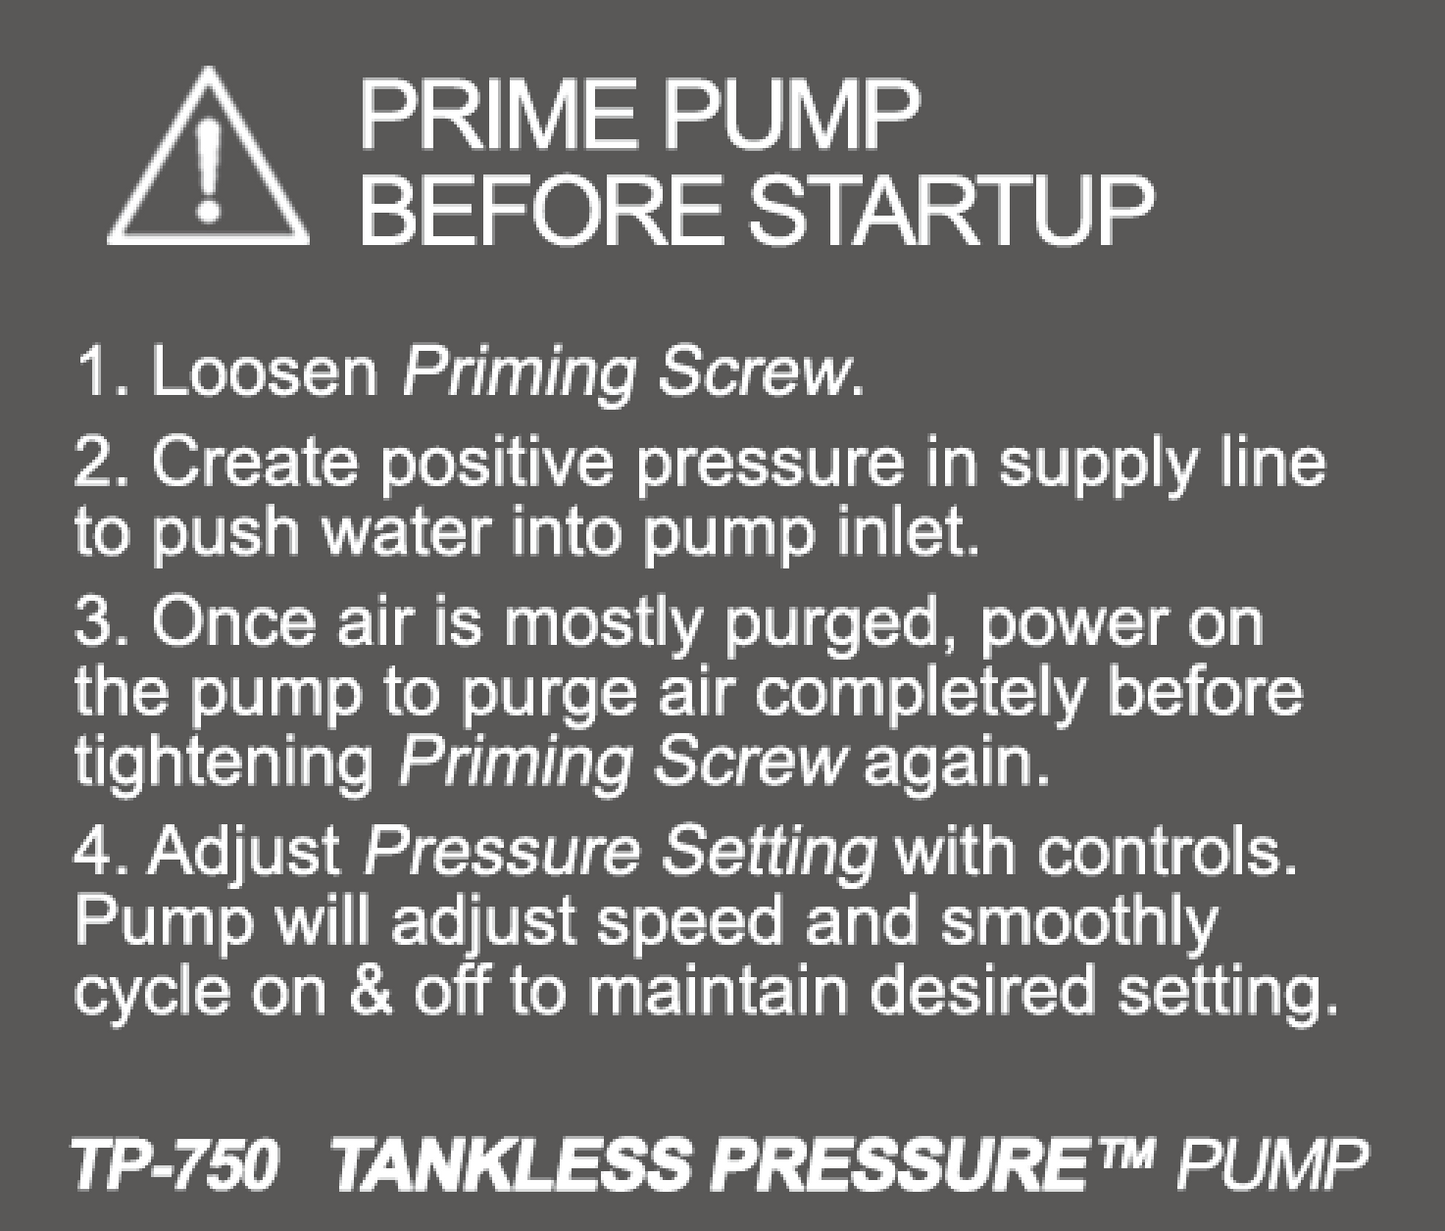 TPP-HP Tankless Pressure HIGH PRESSURE Pump™ System  1HP